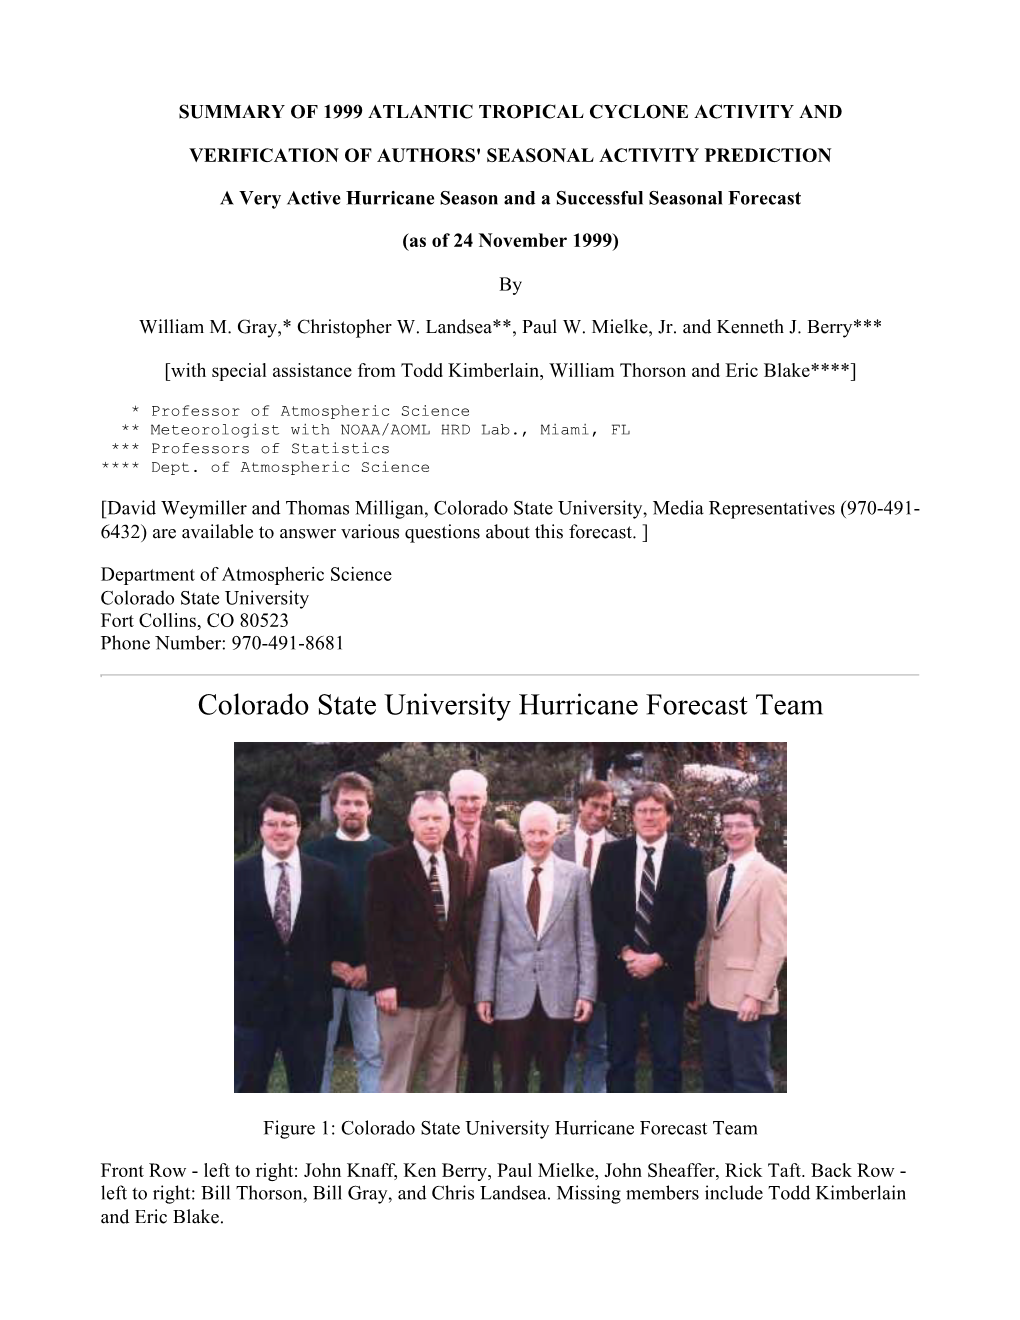 Colorado State University Hurricane Forecast Team